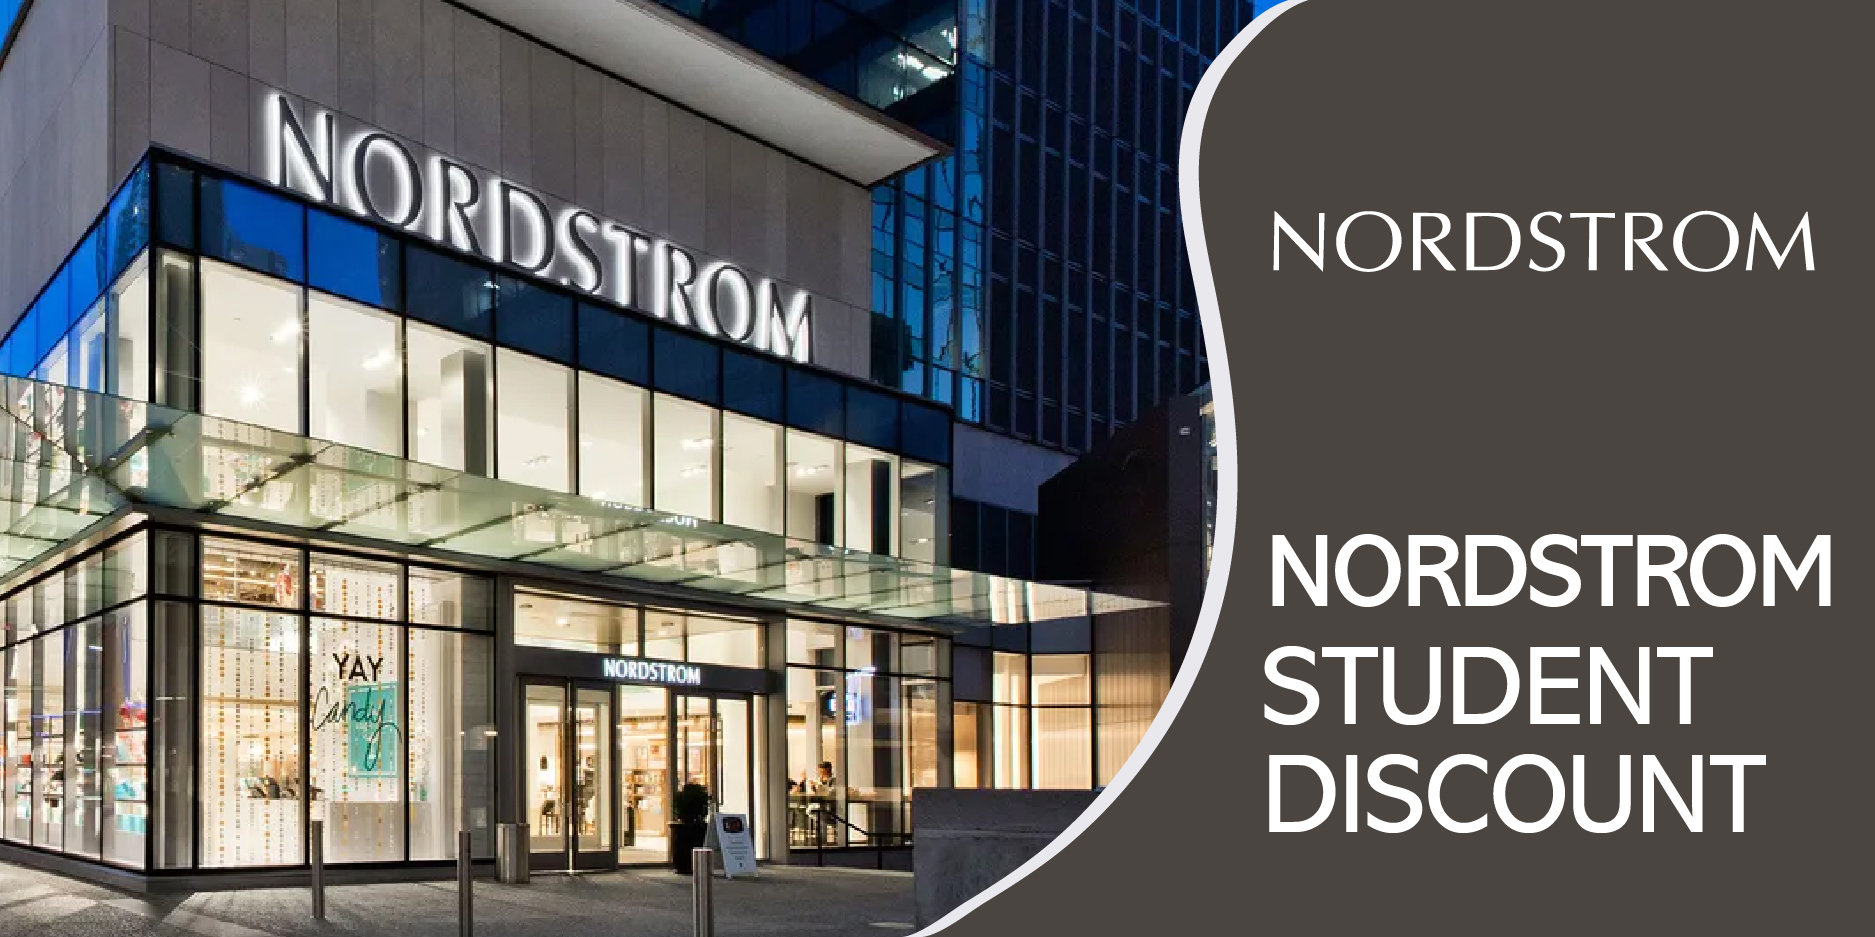 Nordstrom Student Discount